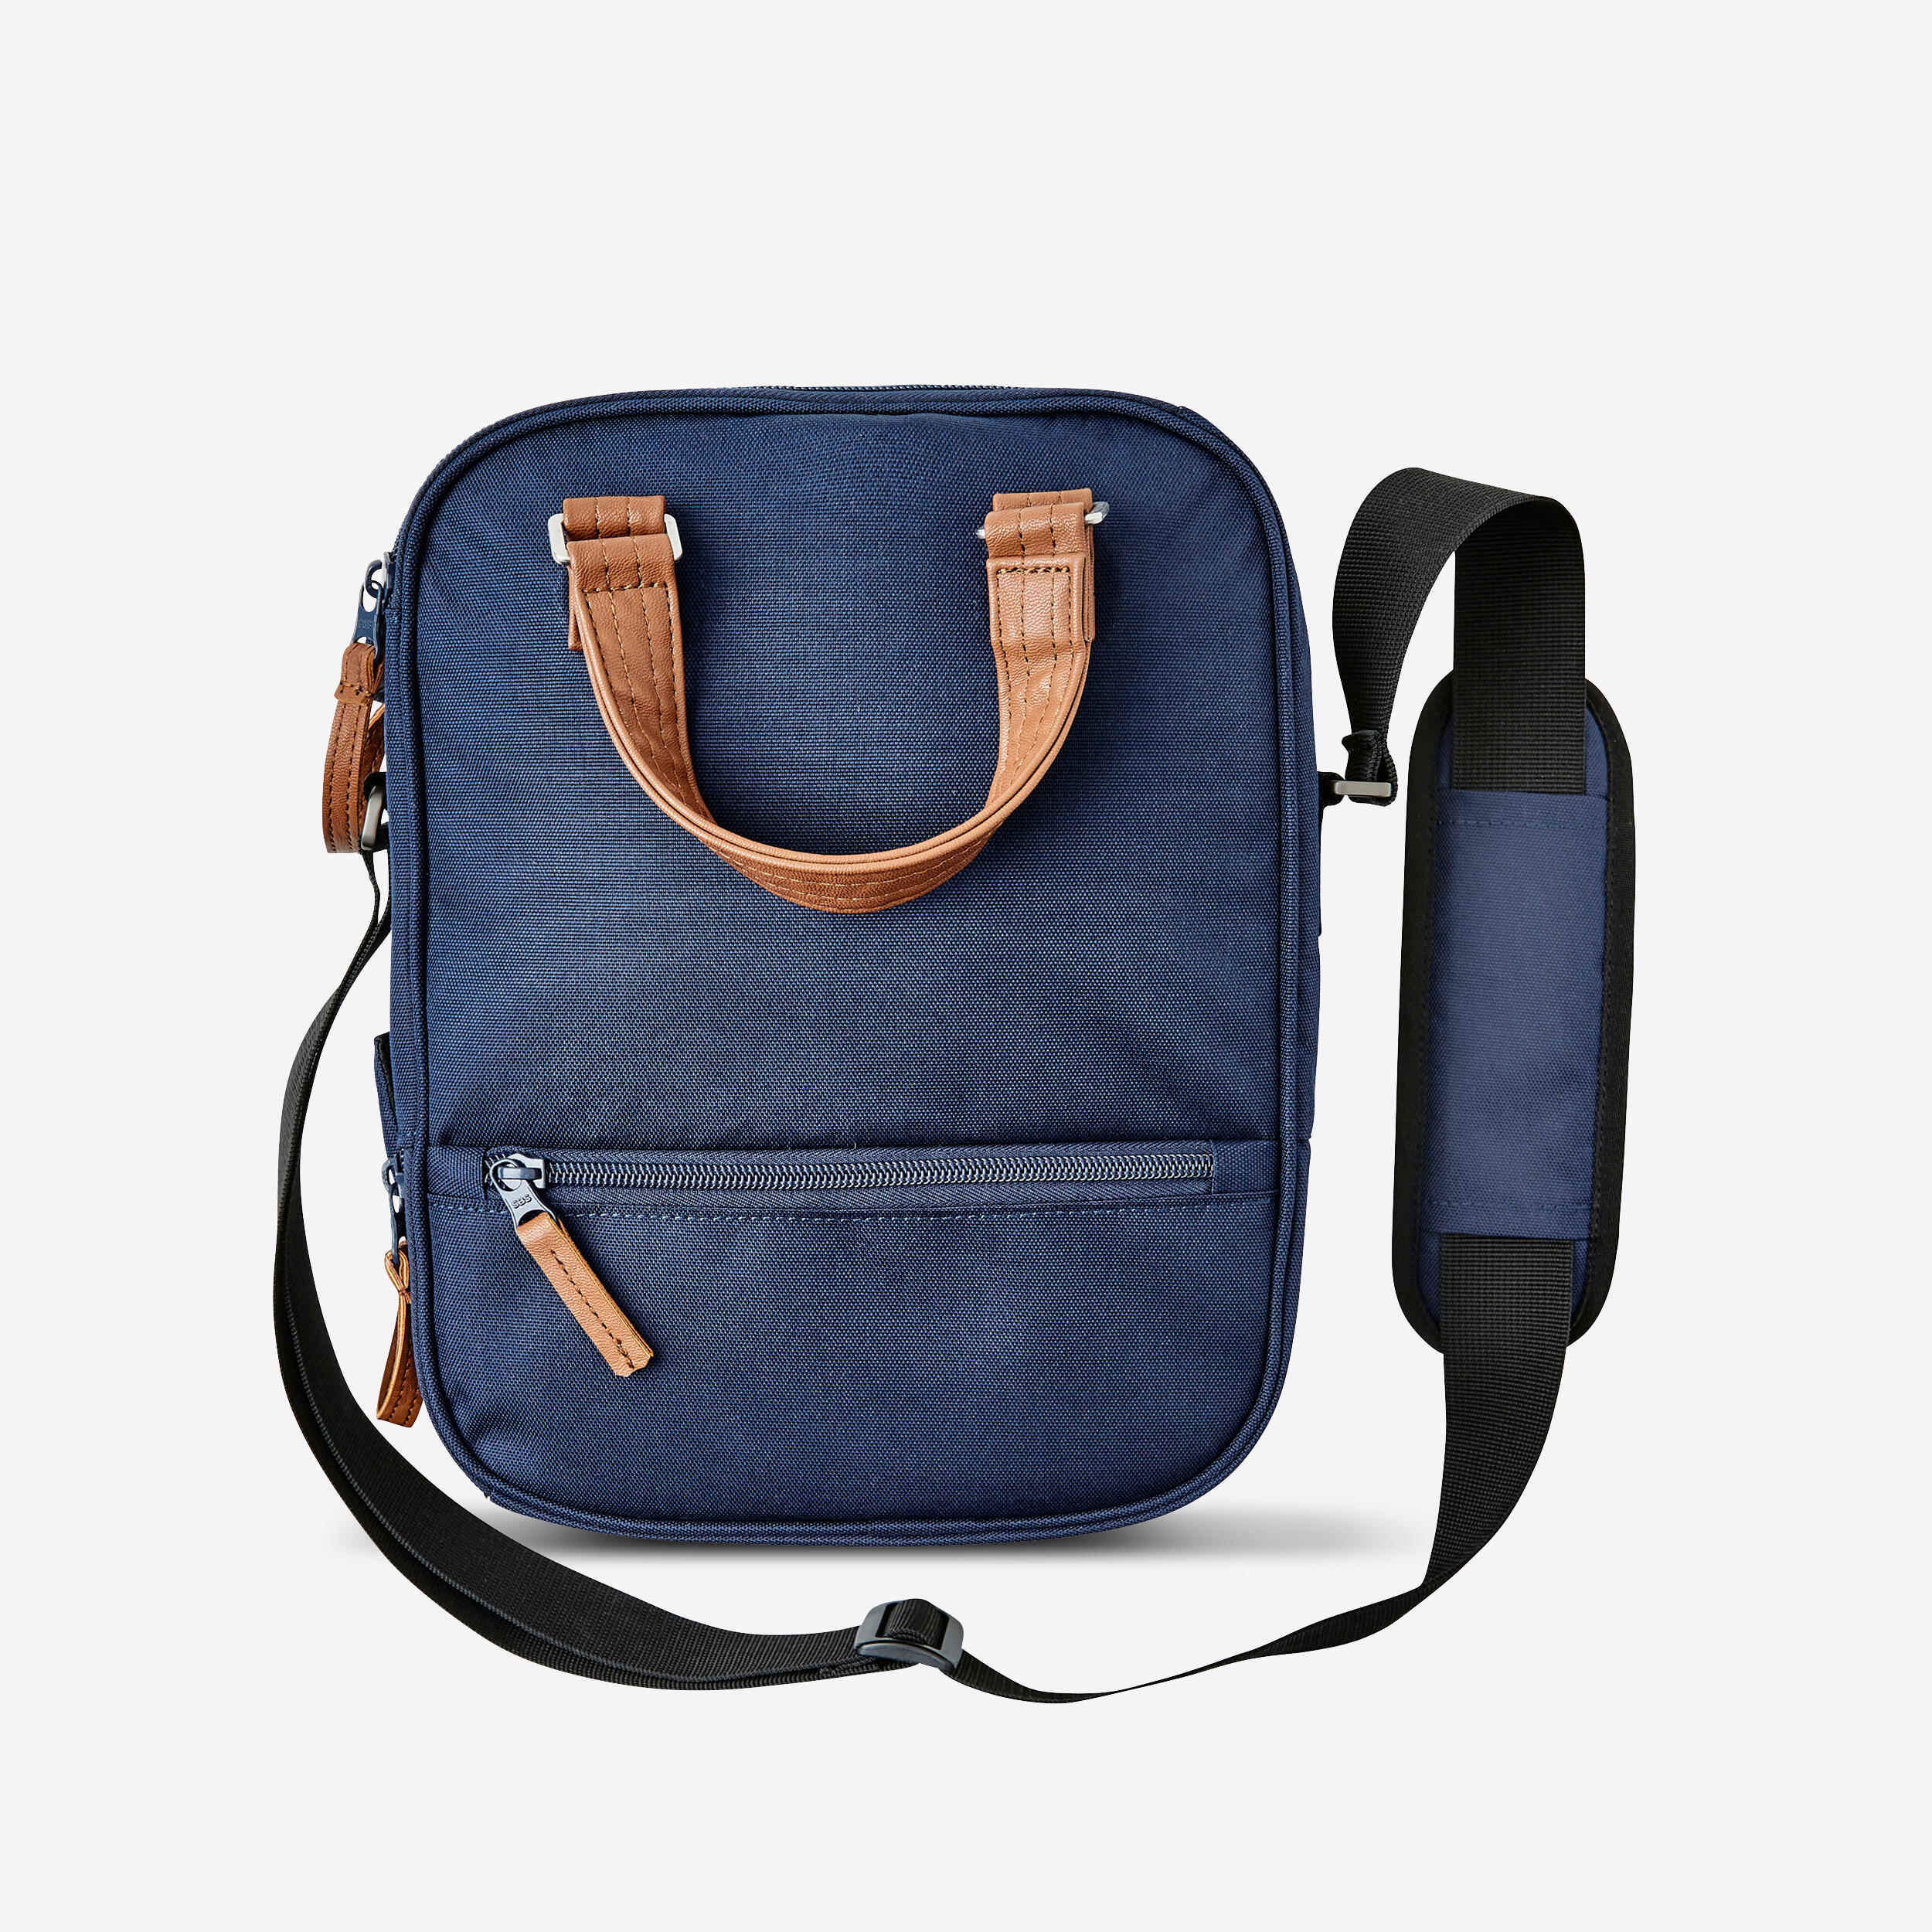 KOODZA Semi-Rigid XL Bag for 3 Petanque Boules and Accessories - Blue